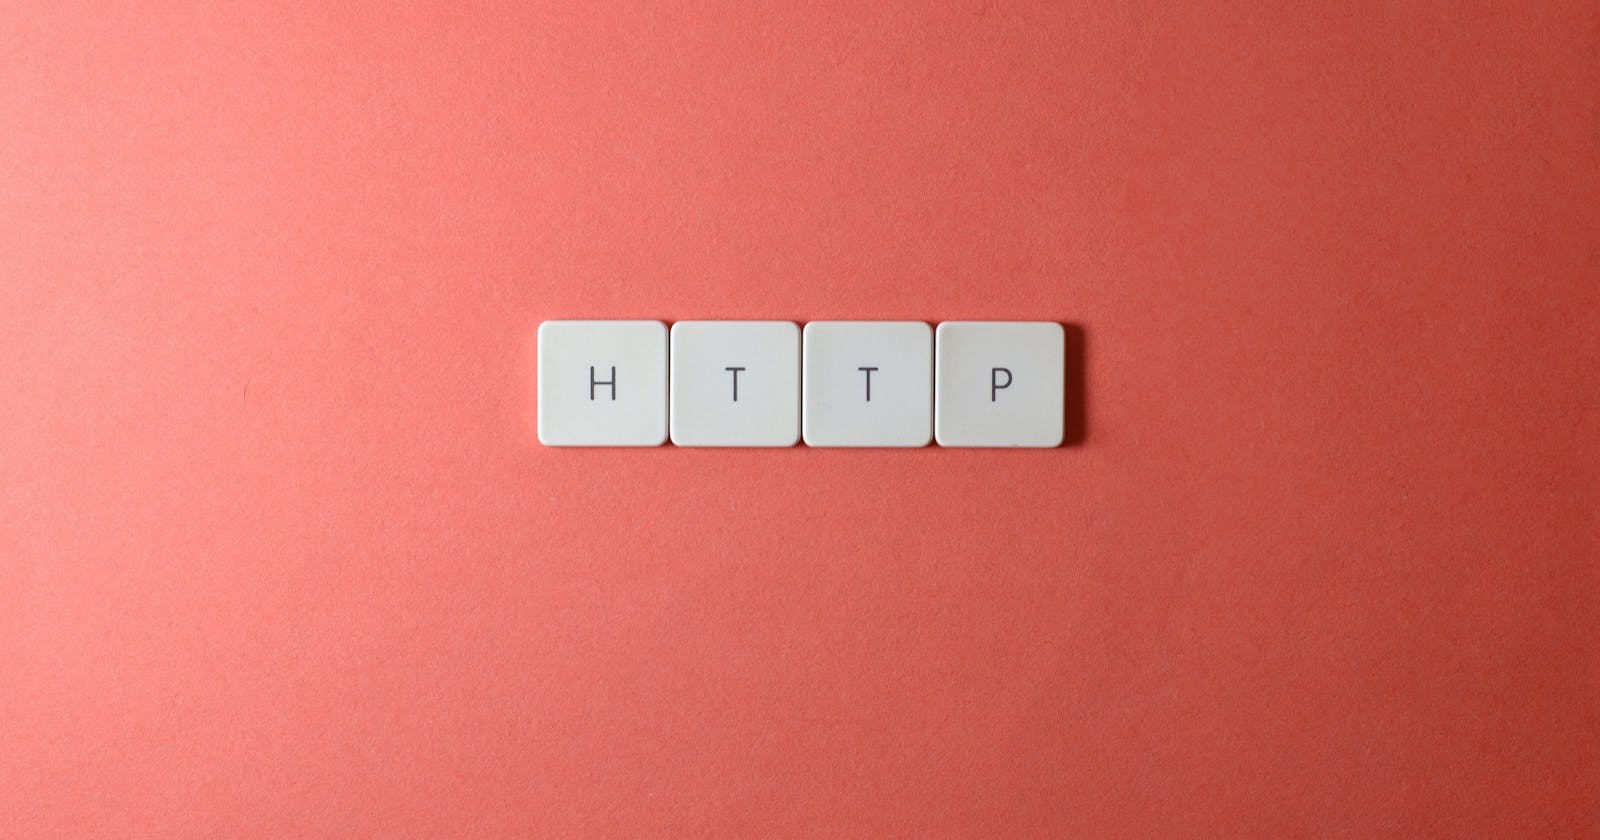 HTTP: Fundamentals of HyperText Transfer Protocol (HTTP)